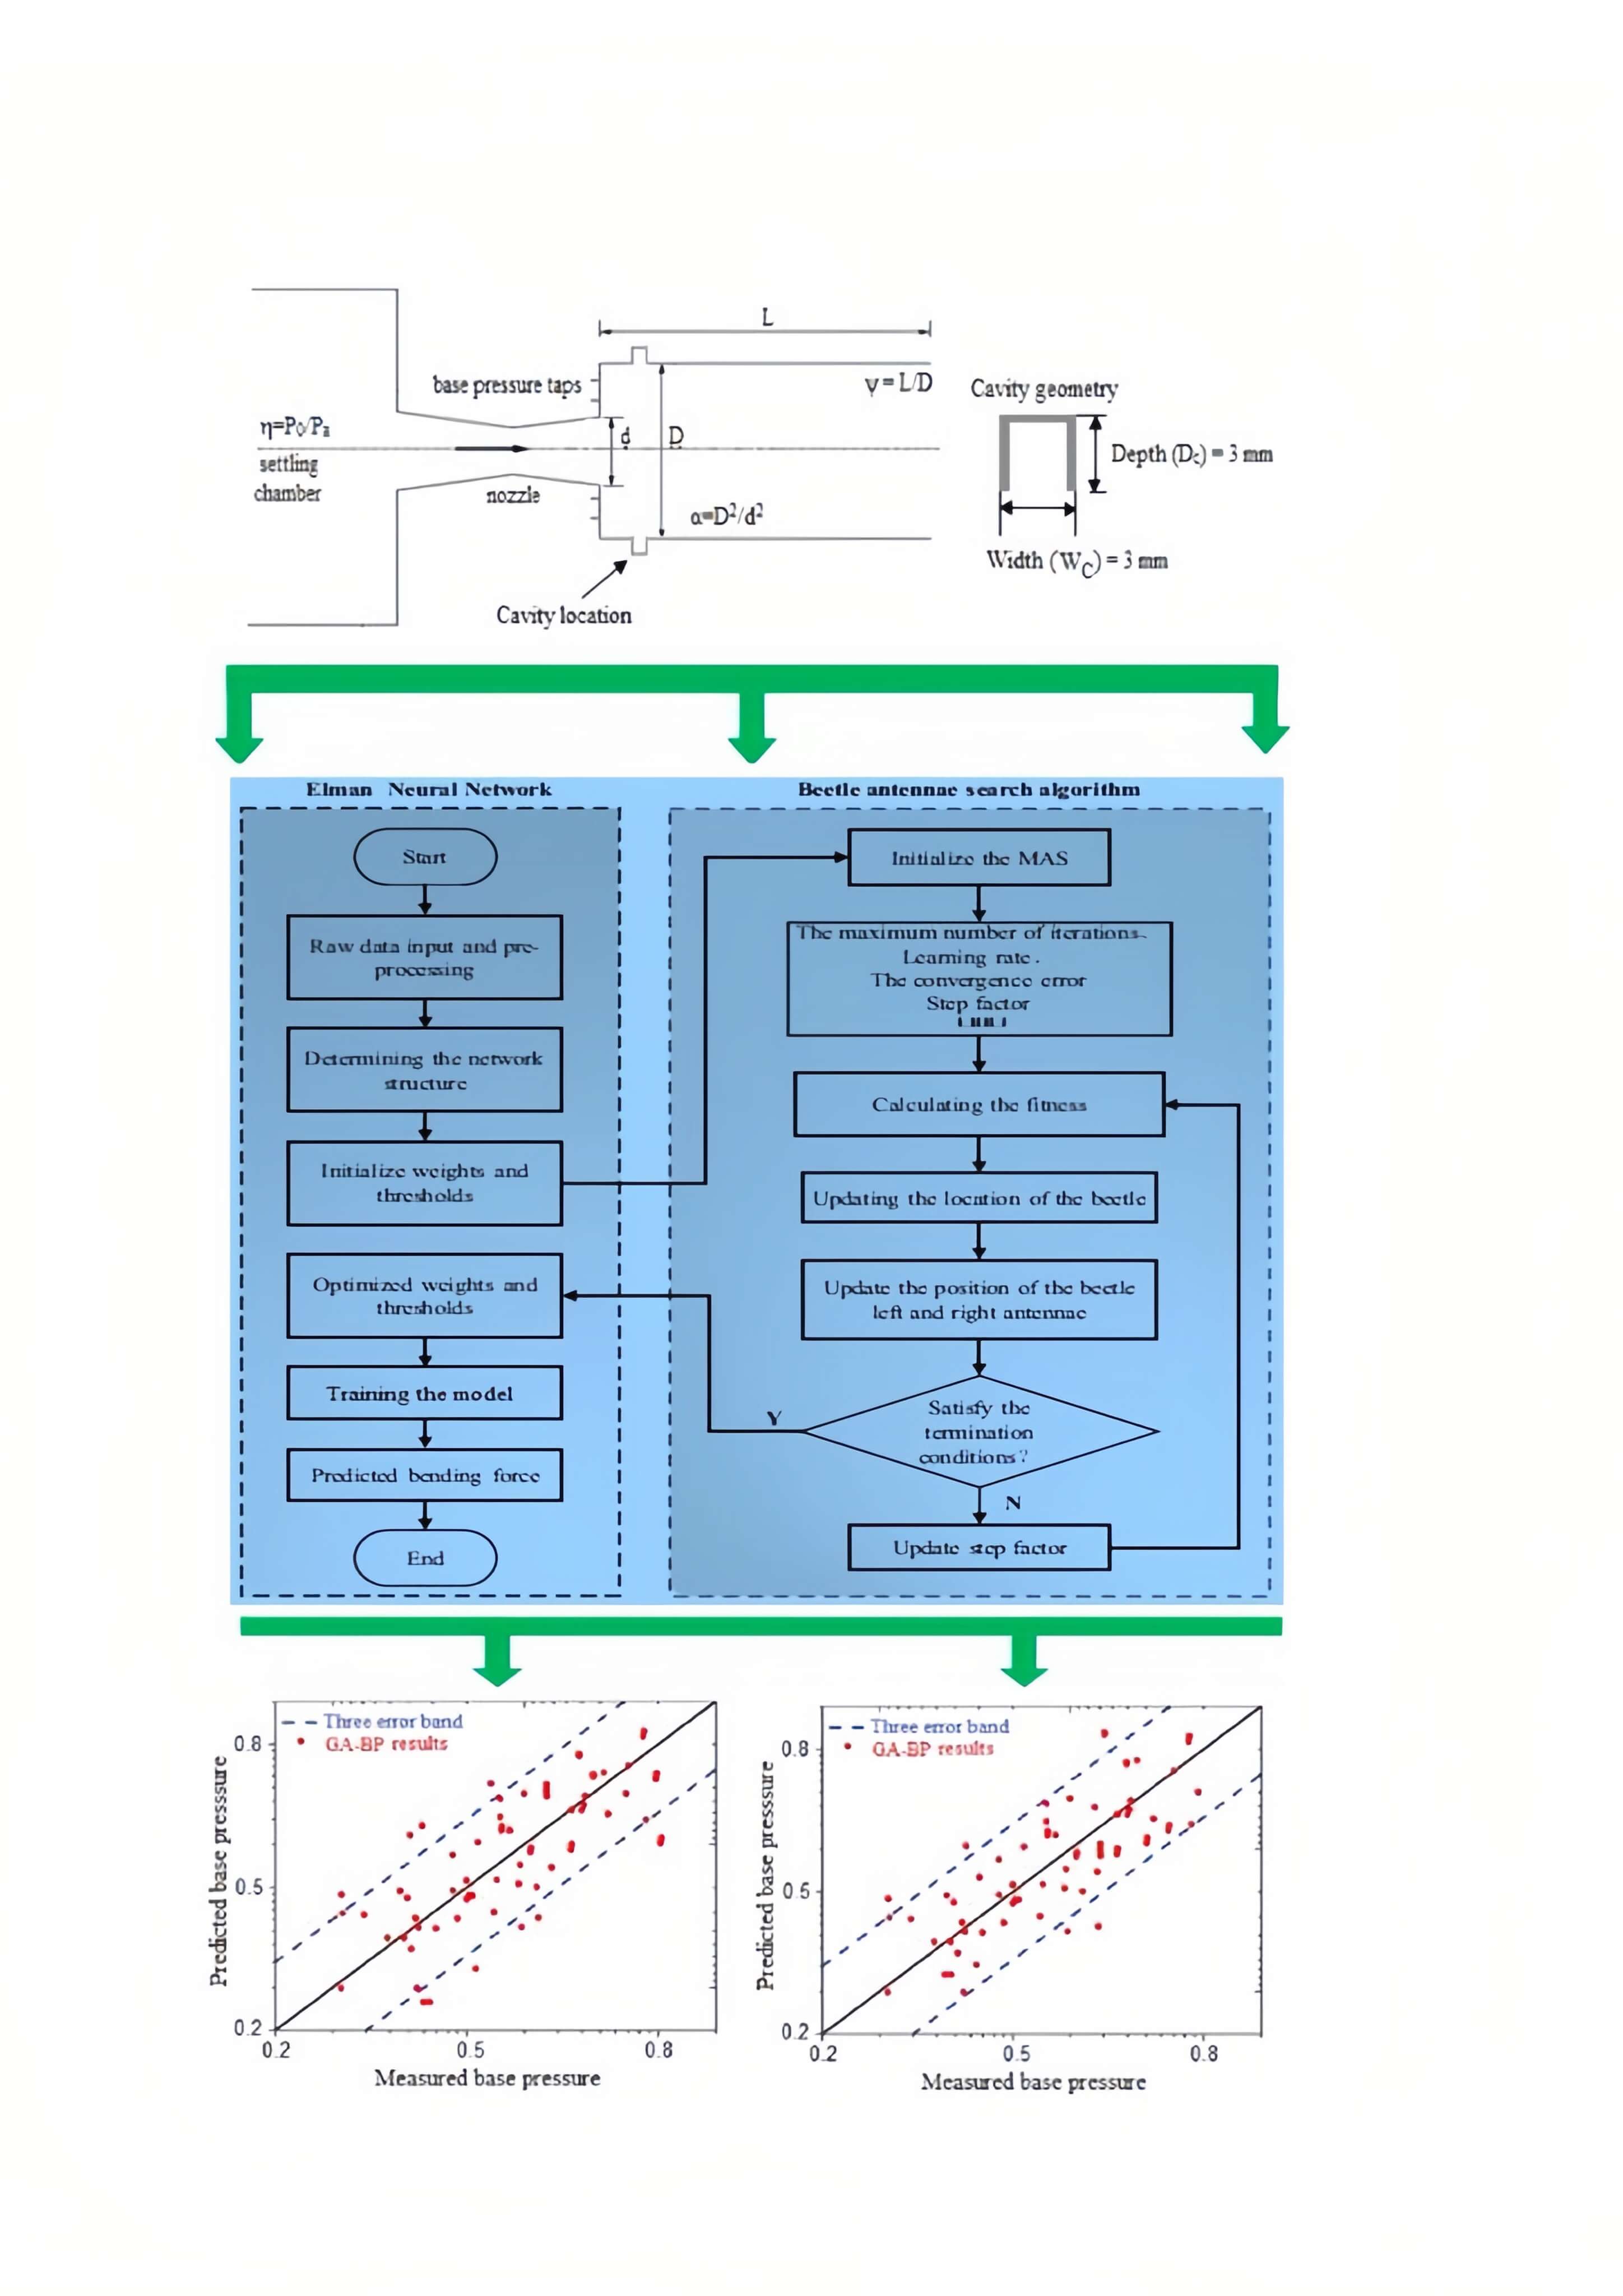 Modeling and Validation of Base Pressure for Aerodynamic Vehicles Based on Machine Learning Models